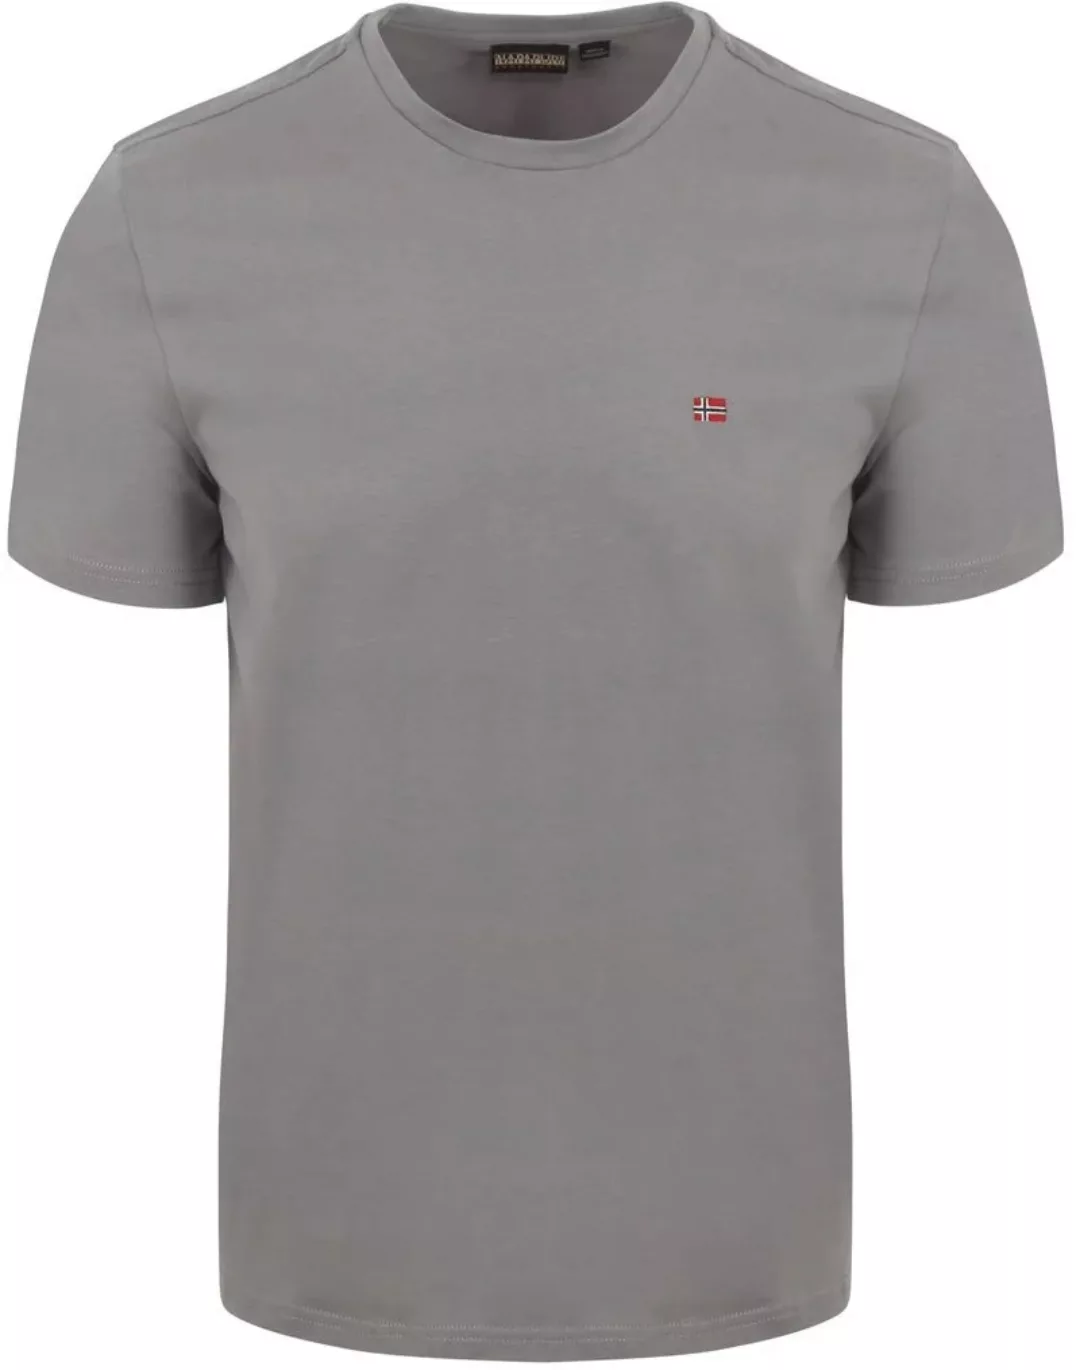 Napapijri Salis T-shirt Mid Grau - Größe S günstig online kaufen